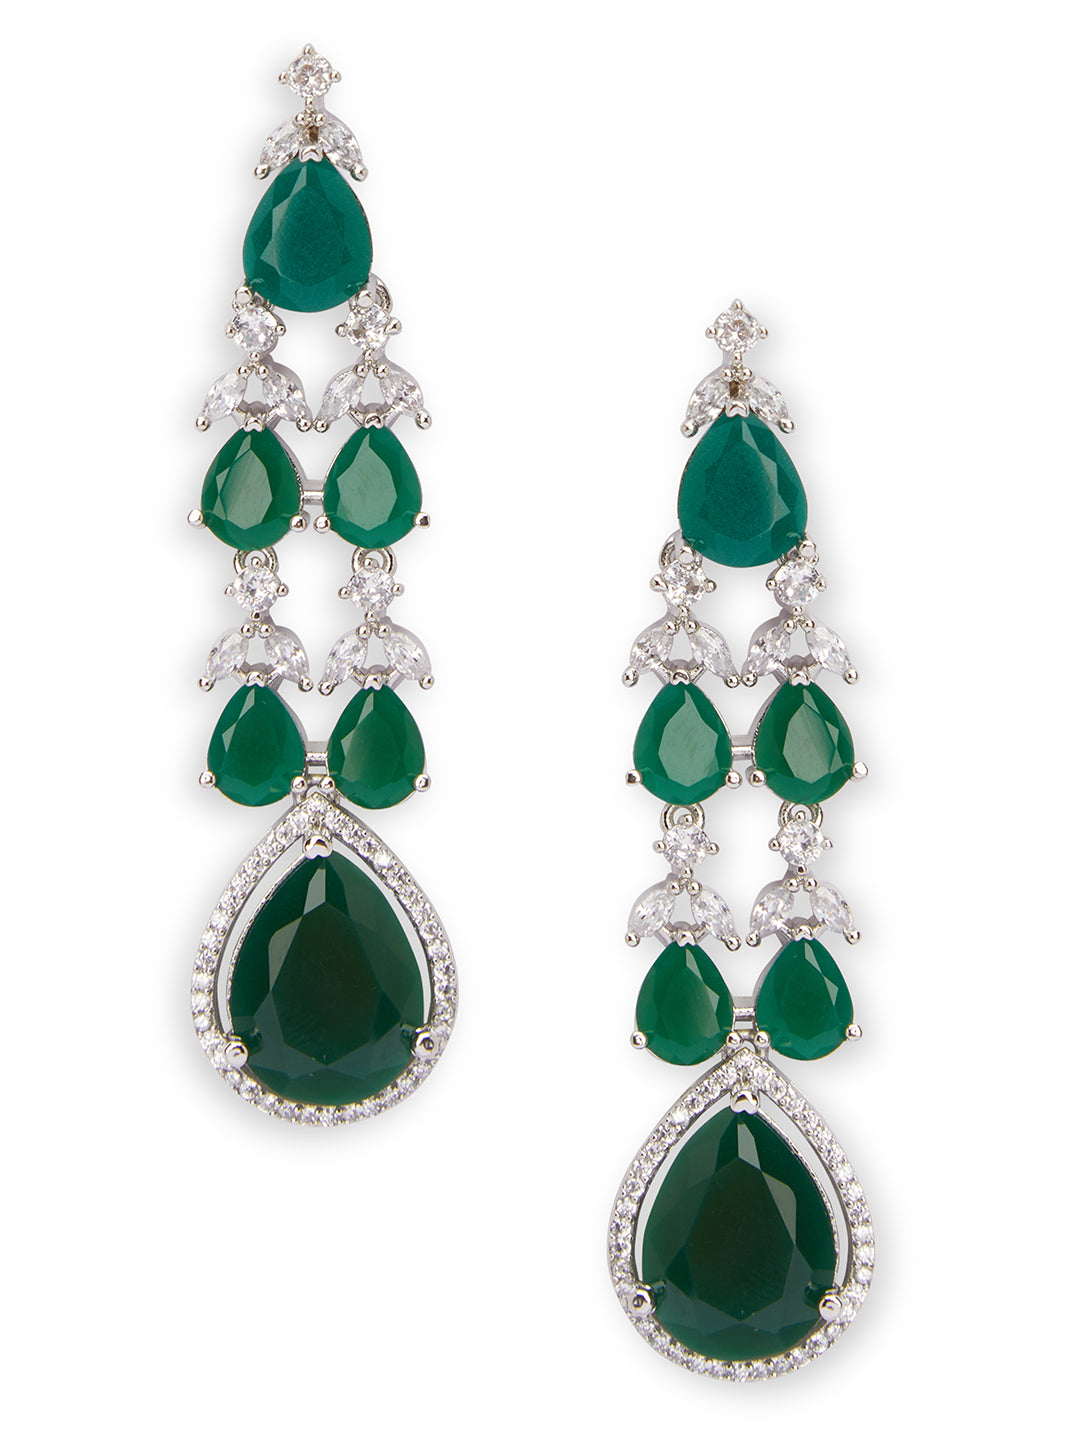 Green Emerald Elegance CZ Necklace Set 